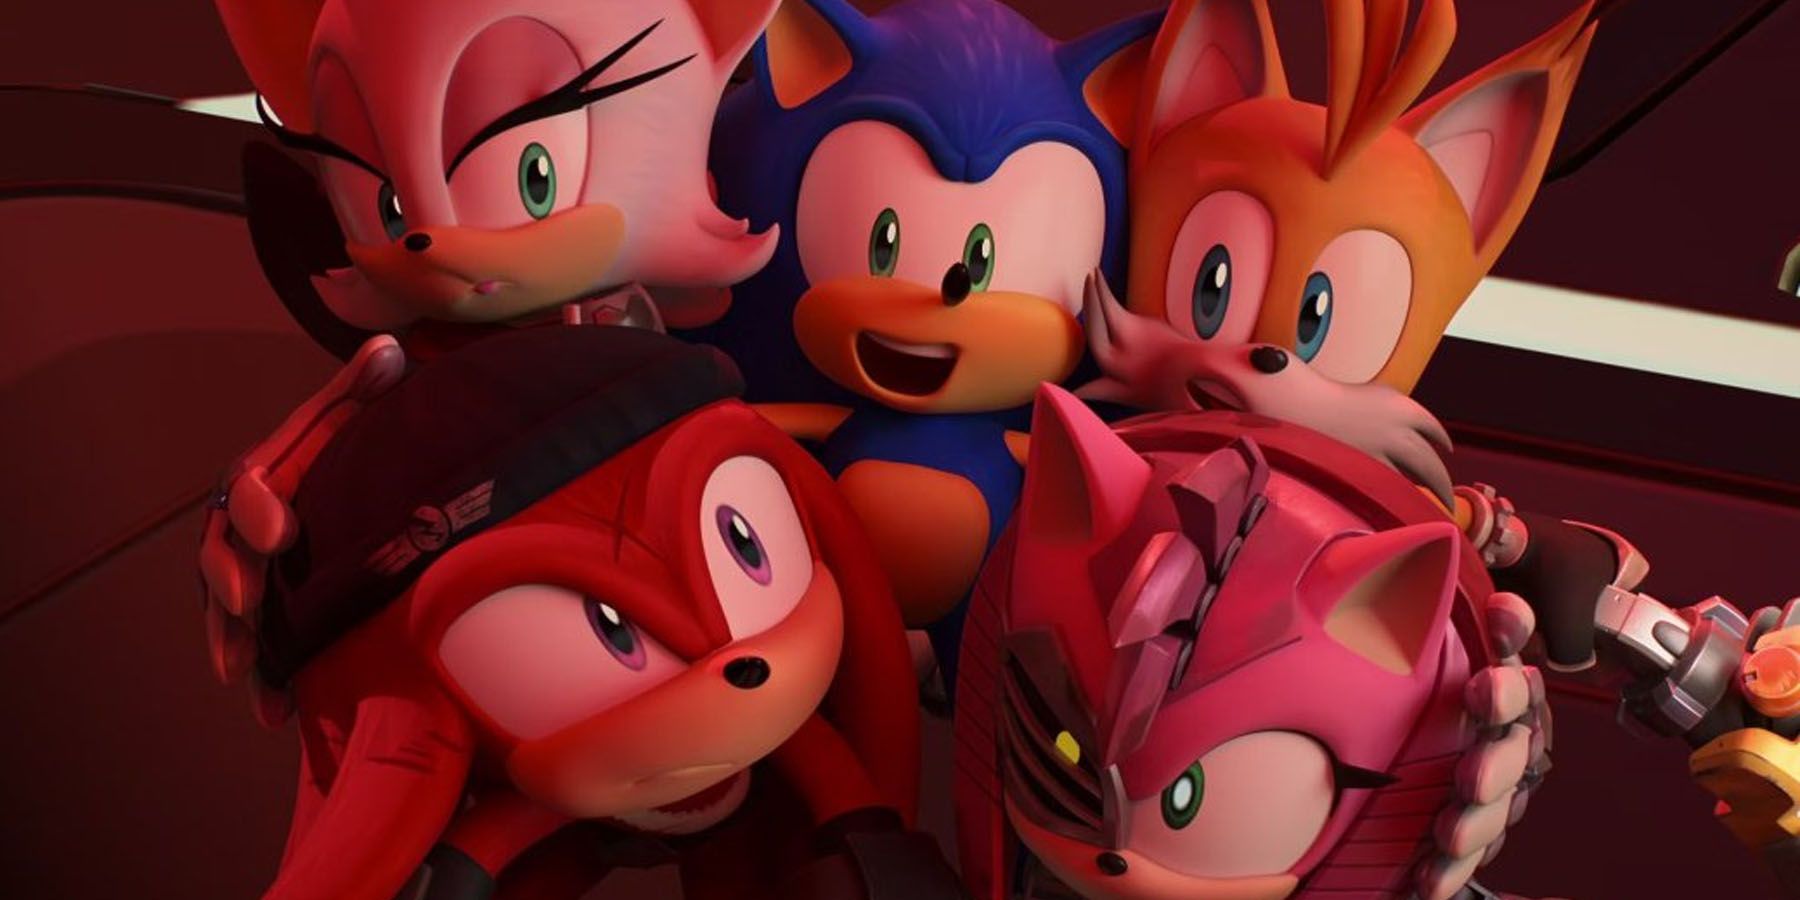 Sonic Dash Sonic Prime Event  Sonic dash, Sonic, Sonic the hedgehog